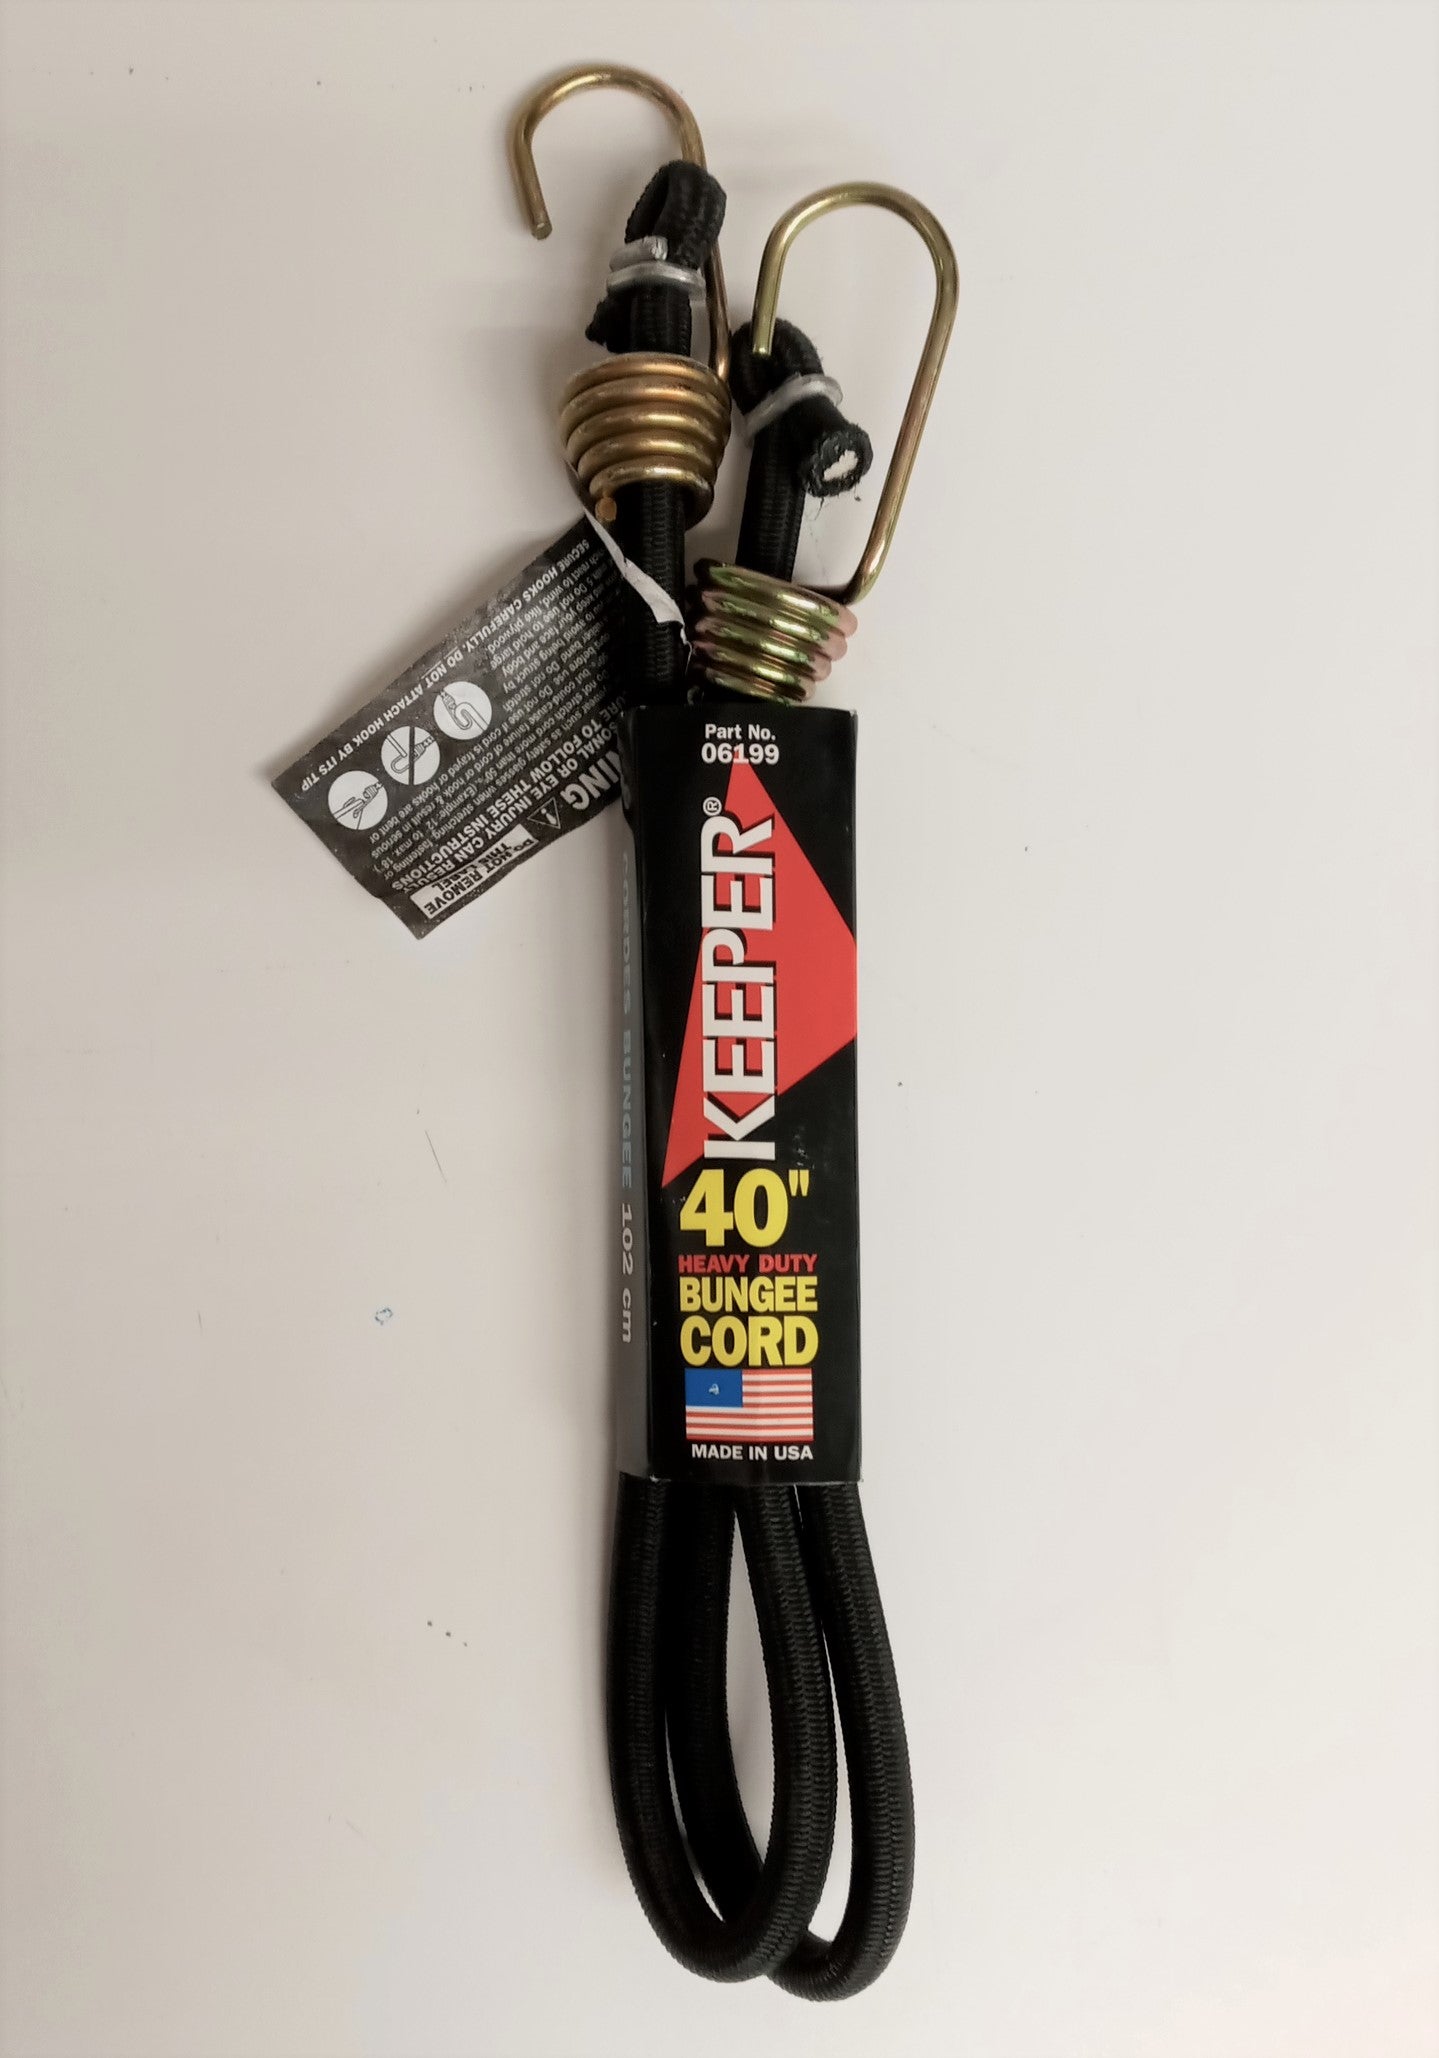 Keeper - Bungee Cord - Adjustable w/Rubber Hooks - 30